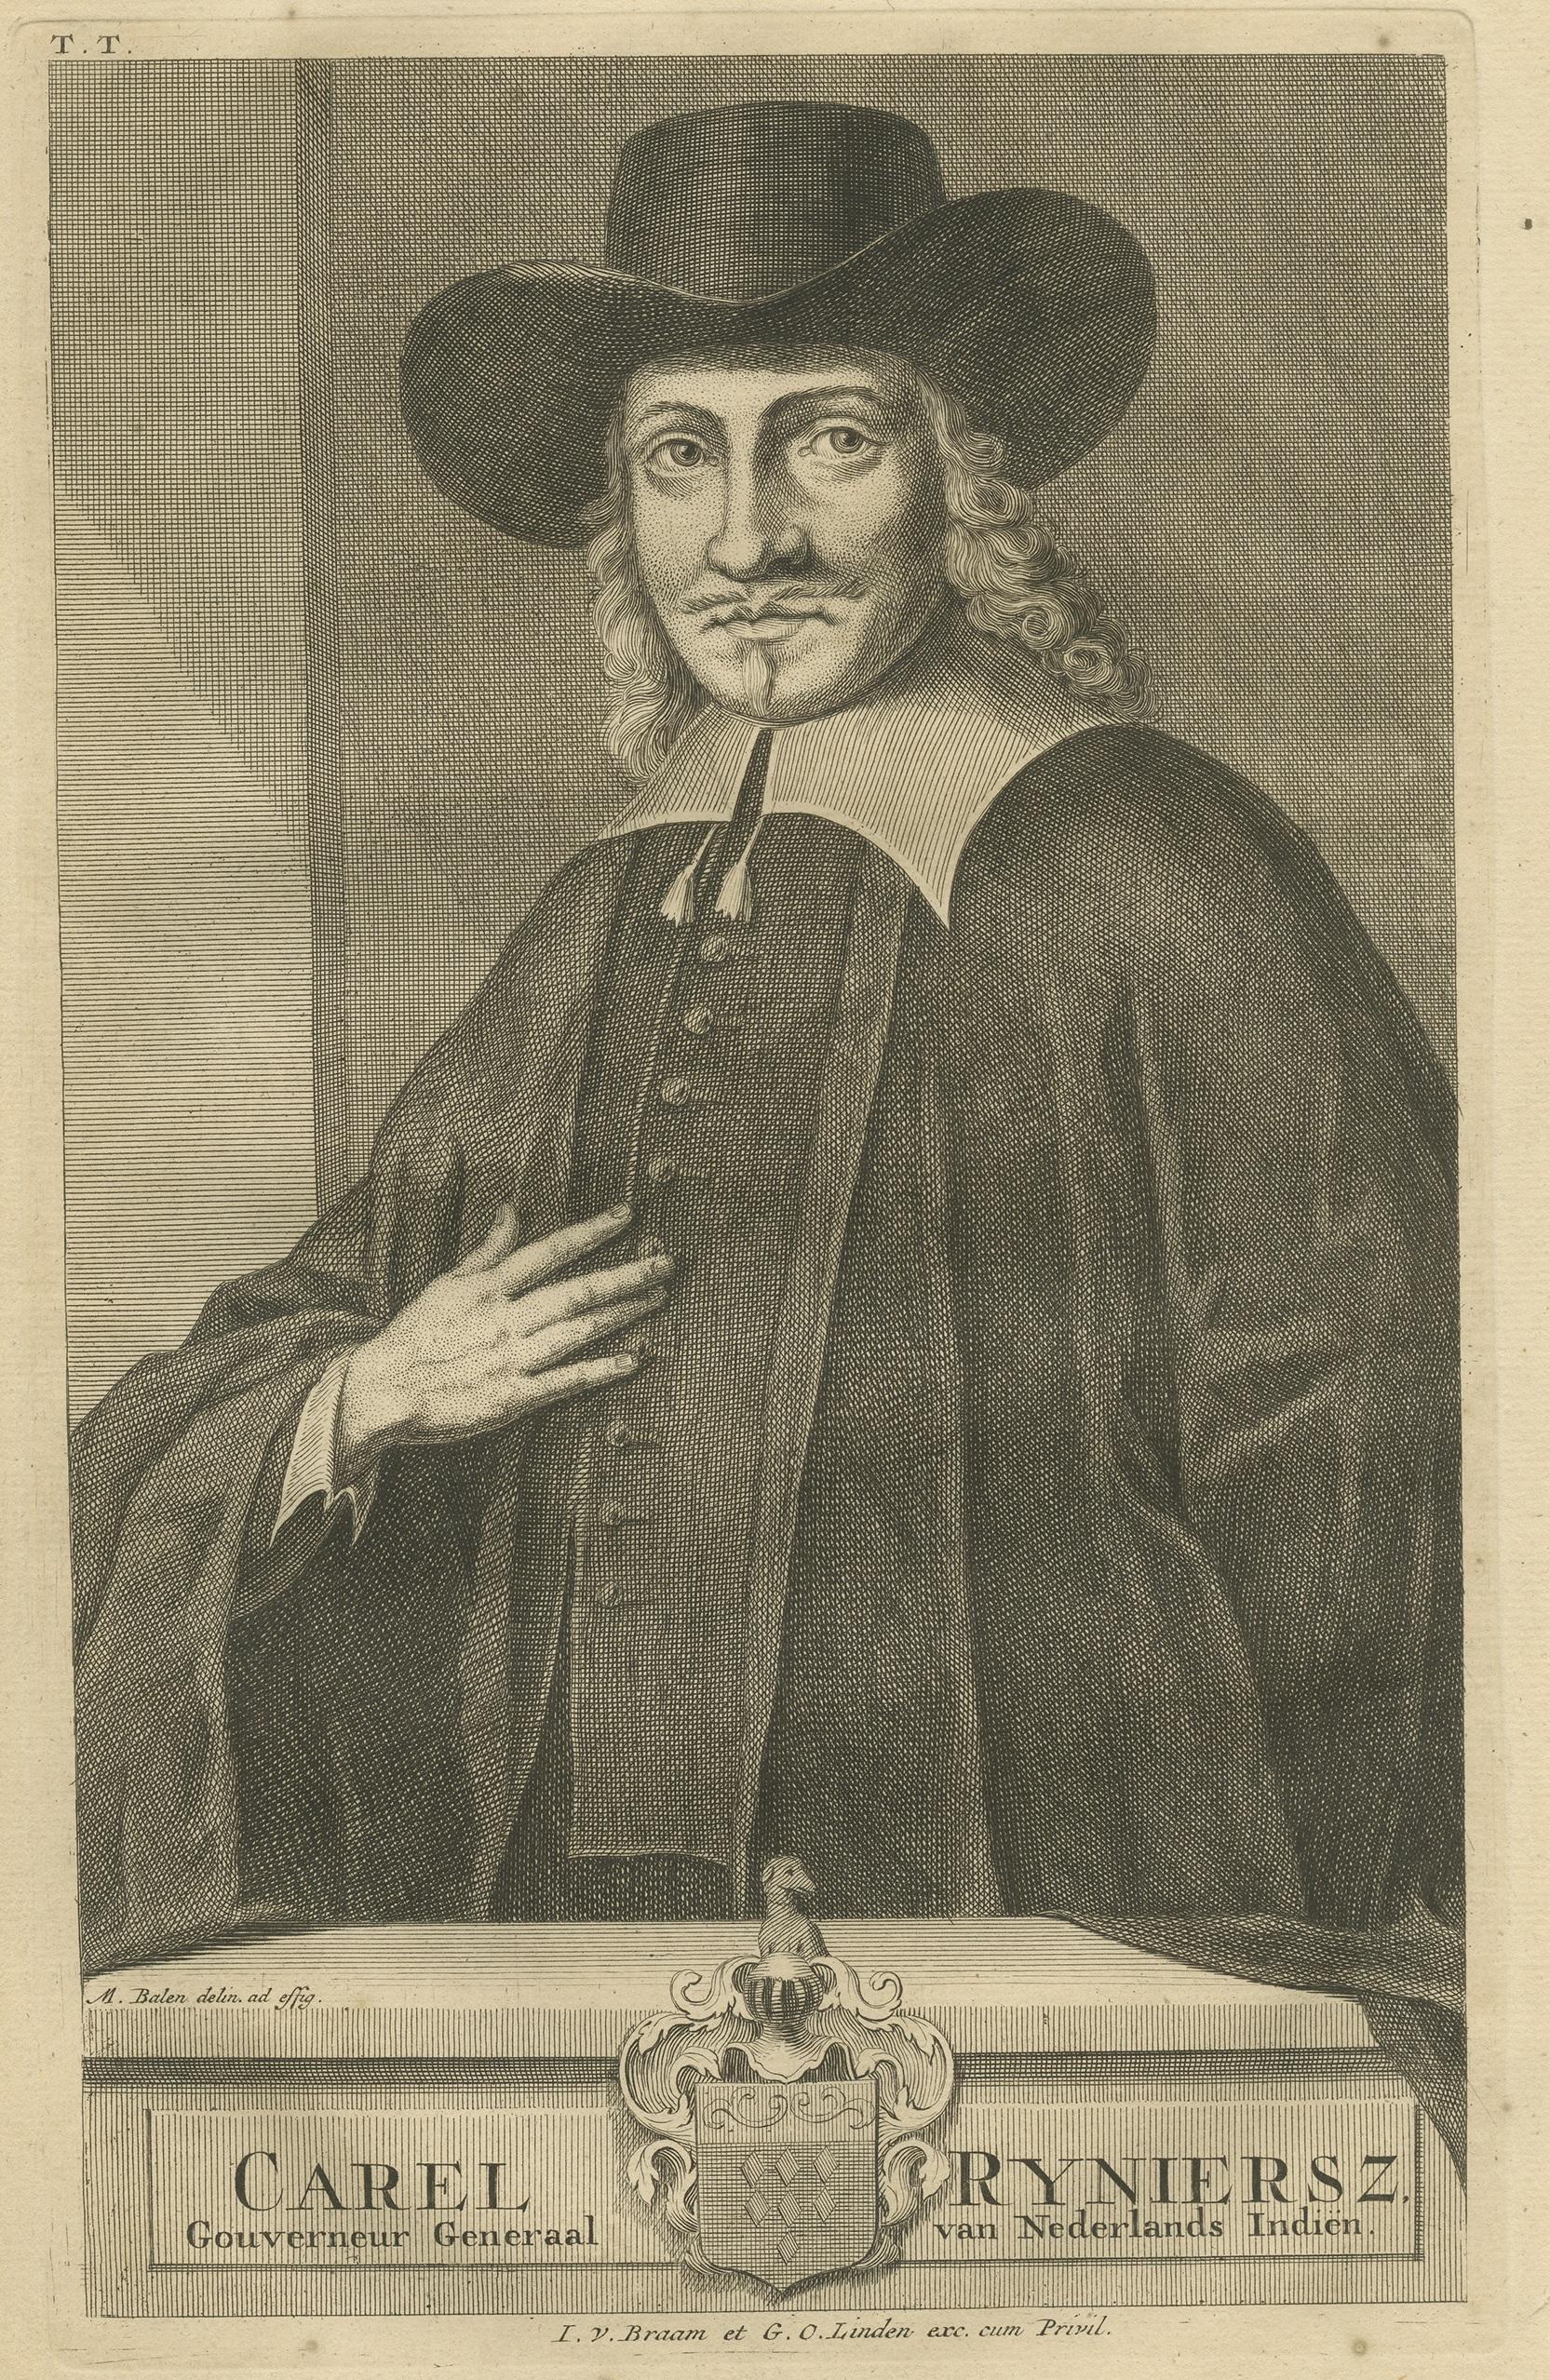 Antique portrait titled 'Carel Ryniersz, Gouverneur Generaal van Nederlands Indiën'. Old portrait of Carel Ryniersz, Governor-General of the Dutch East Indies from 1650 until 1653. This print originates from 'Oud en Nieuw Oost-Indiën' by F.